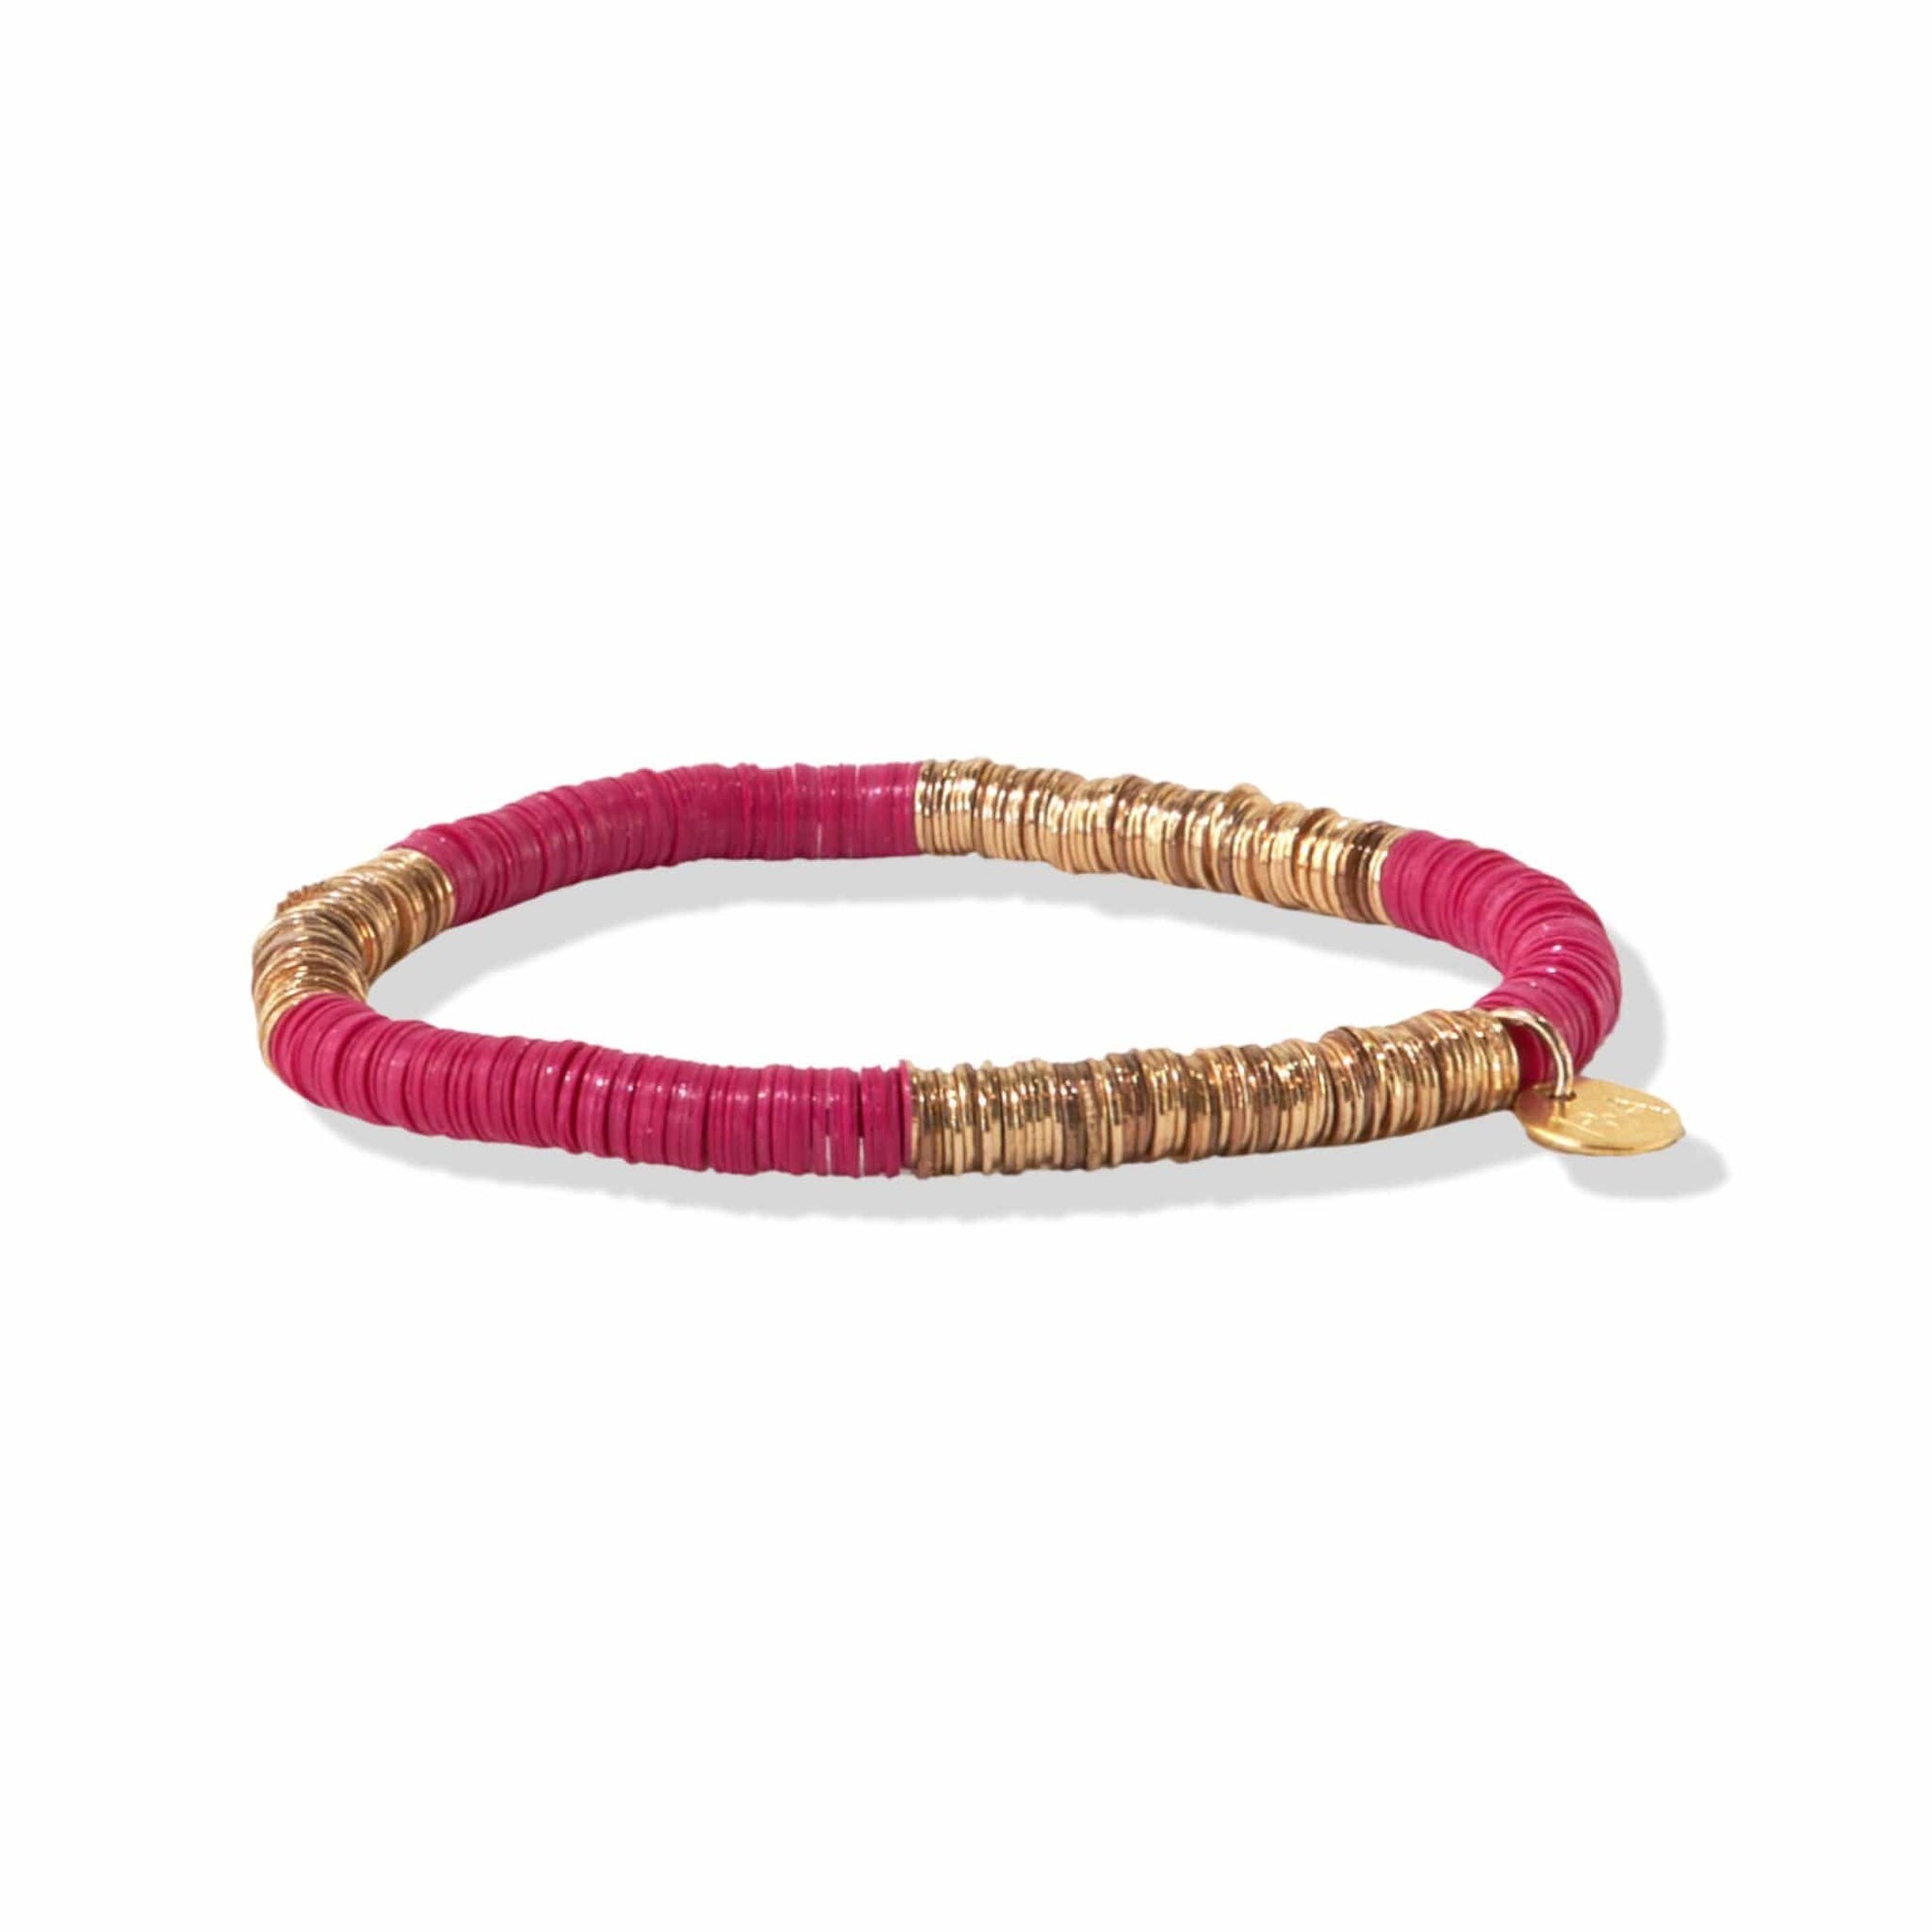 Susie Gold Cuff Bracelet in Hot Pink Kyocera Opal | Kendra Scott